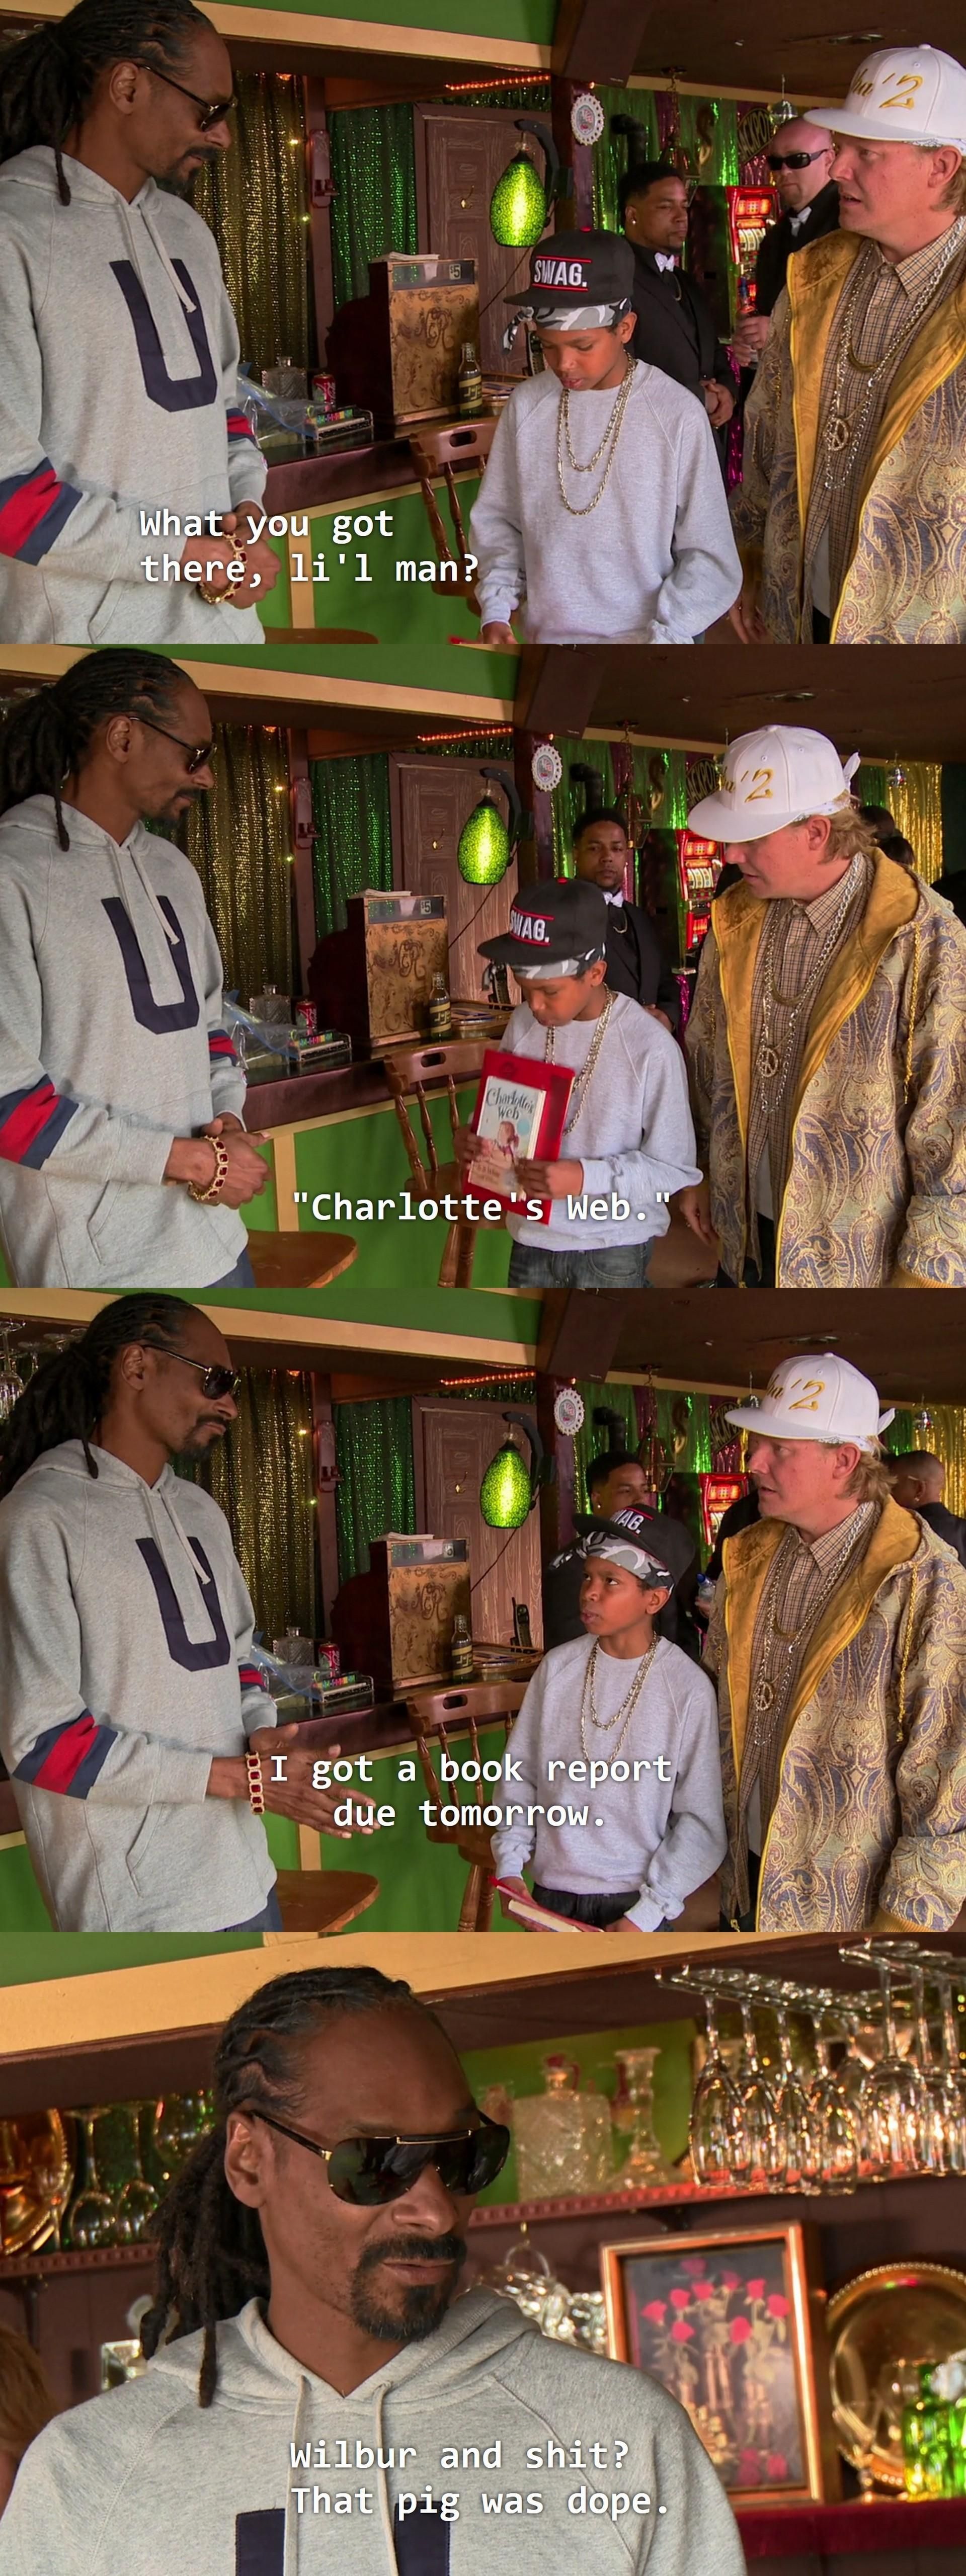 Snoop respects the classics